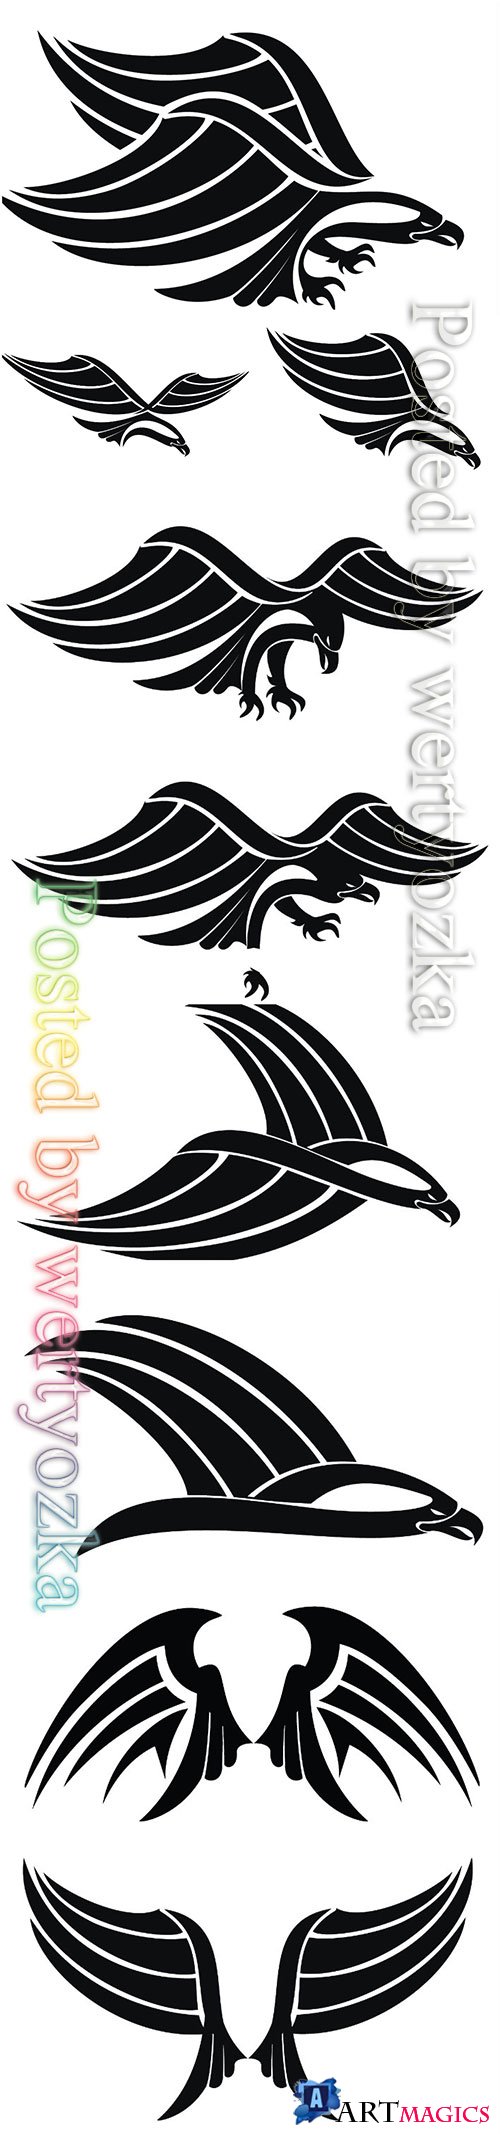 Eagle logos vector illustration